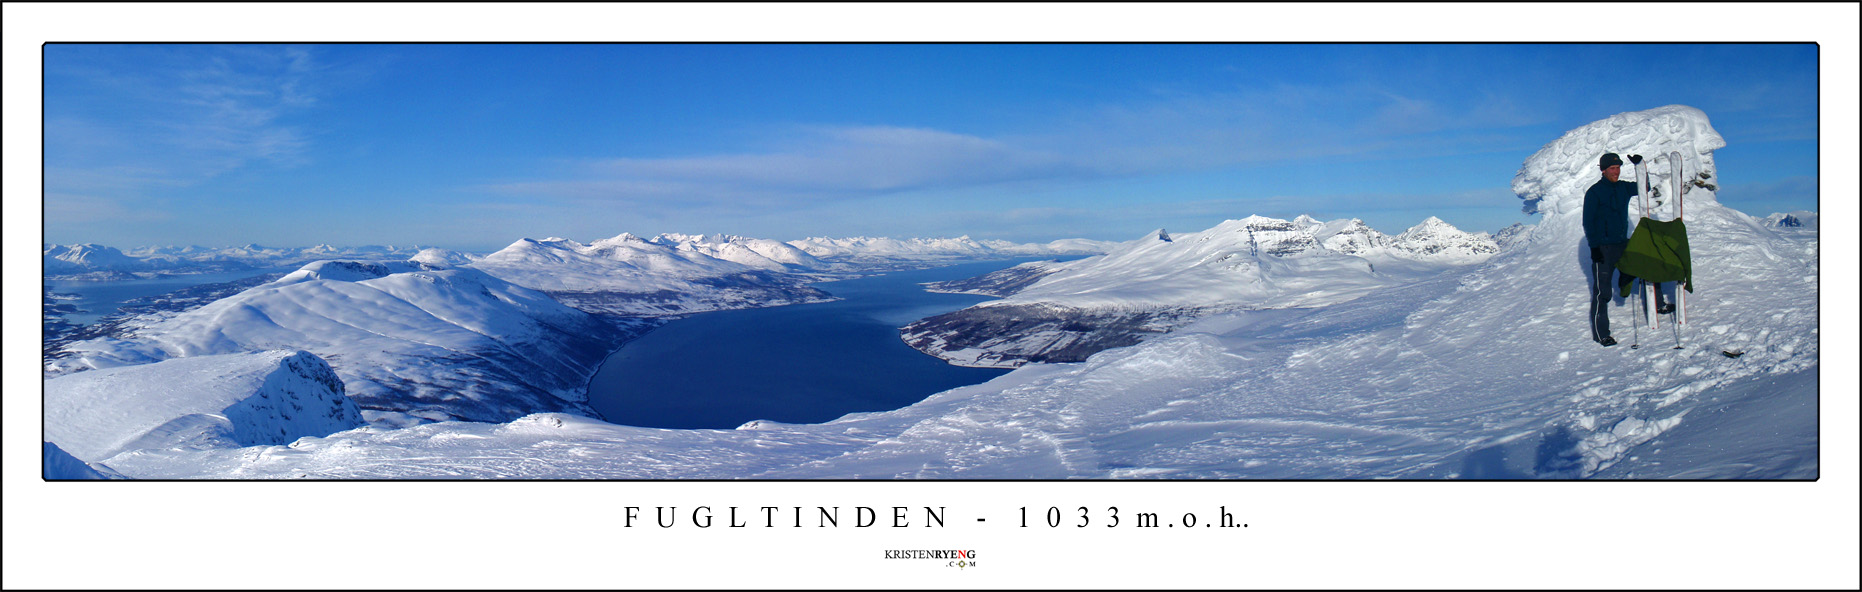 PanoramaFugltinden2.jpg - Fugltinden - 1033 moh (Balsfjorden)